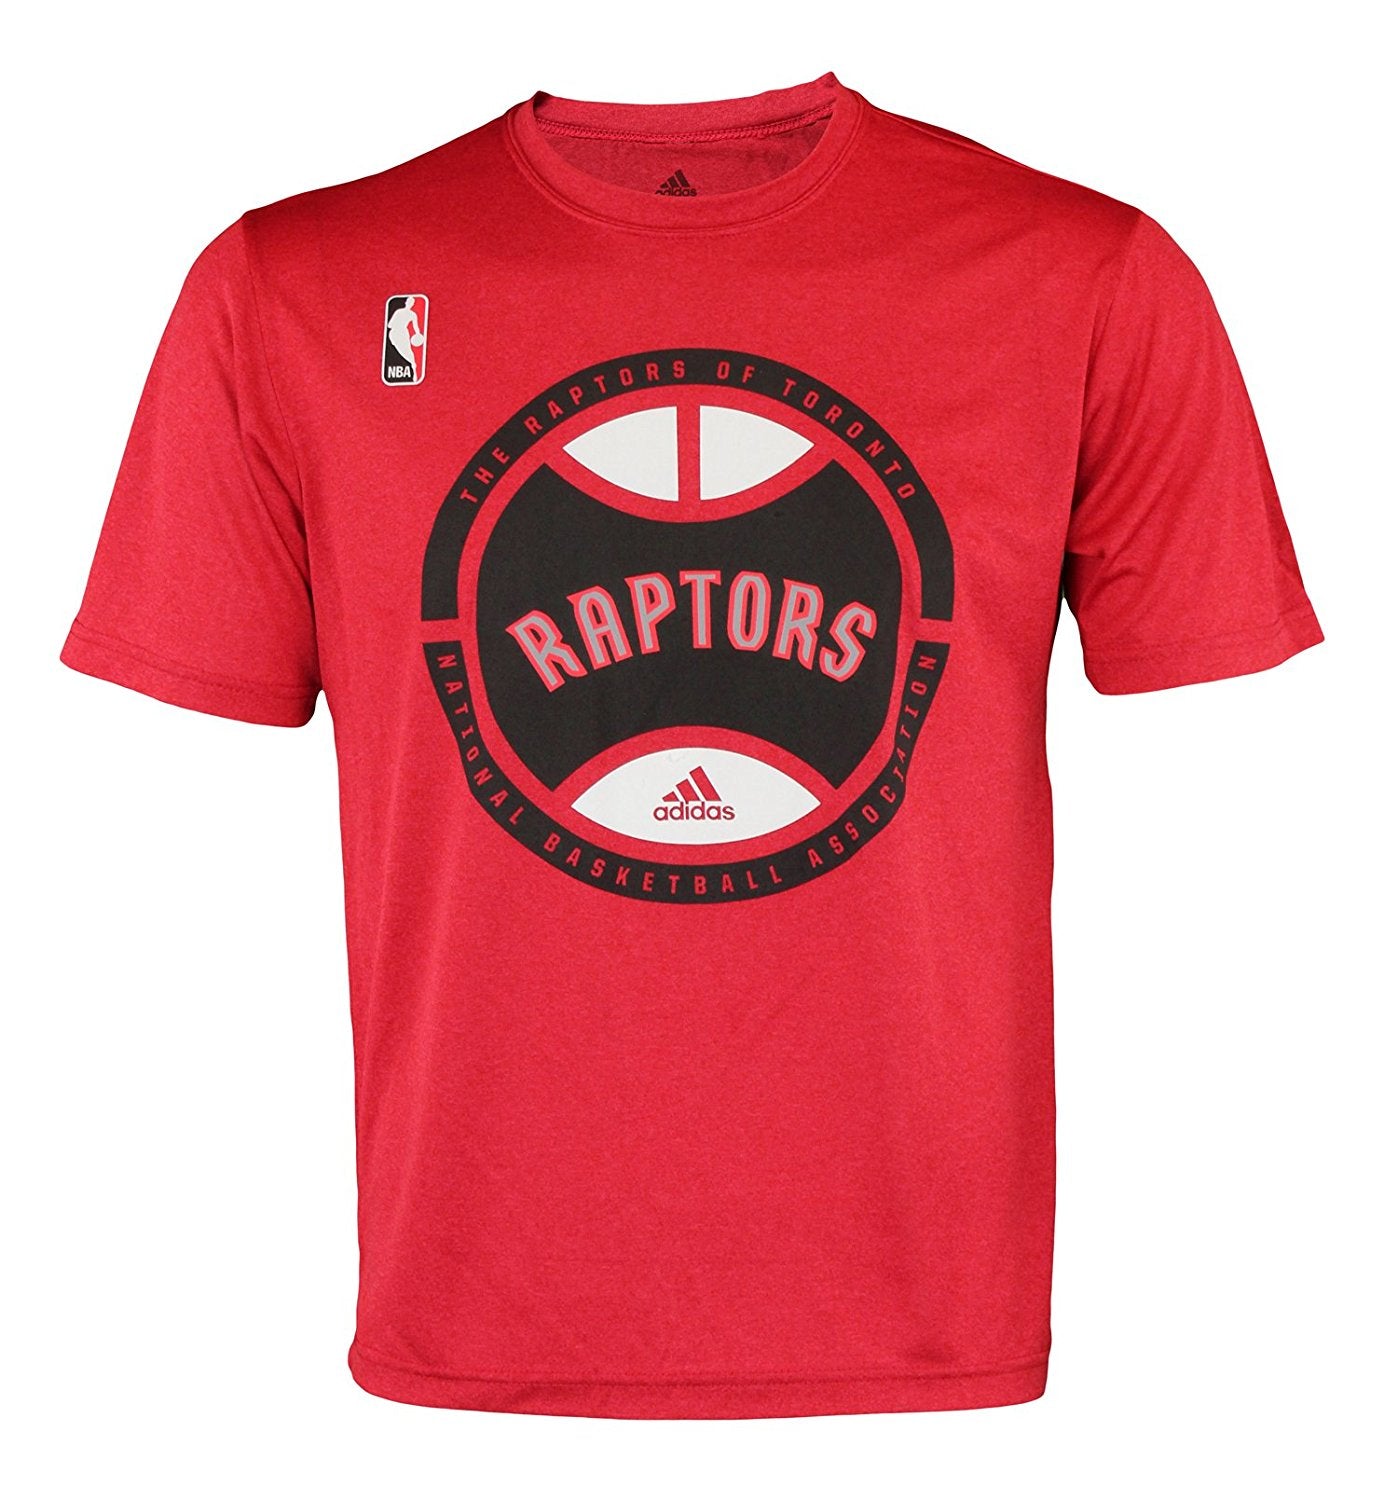 Champion Toronto Raptors NBA Jerseys for sale